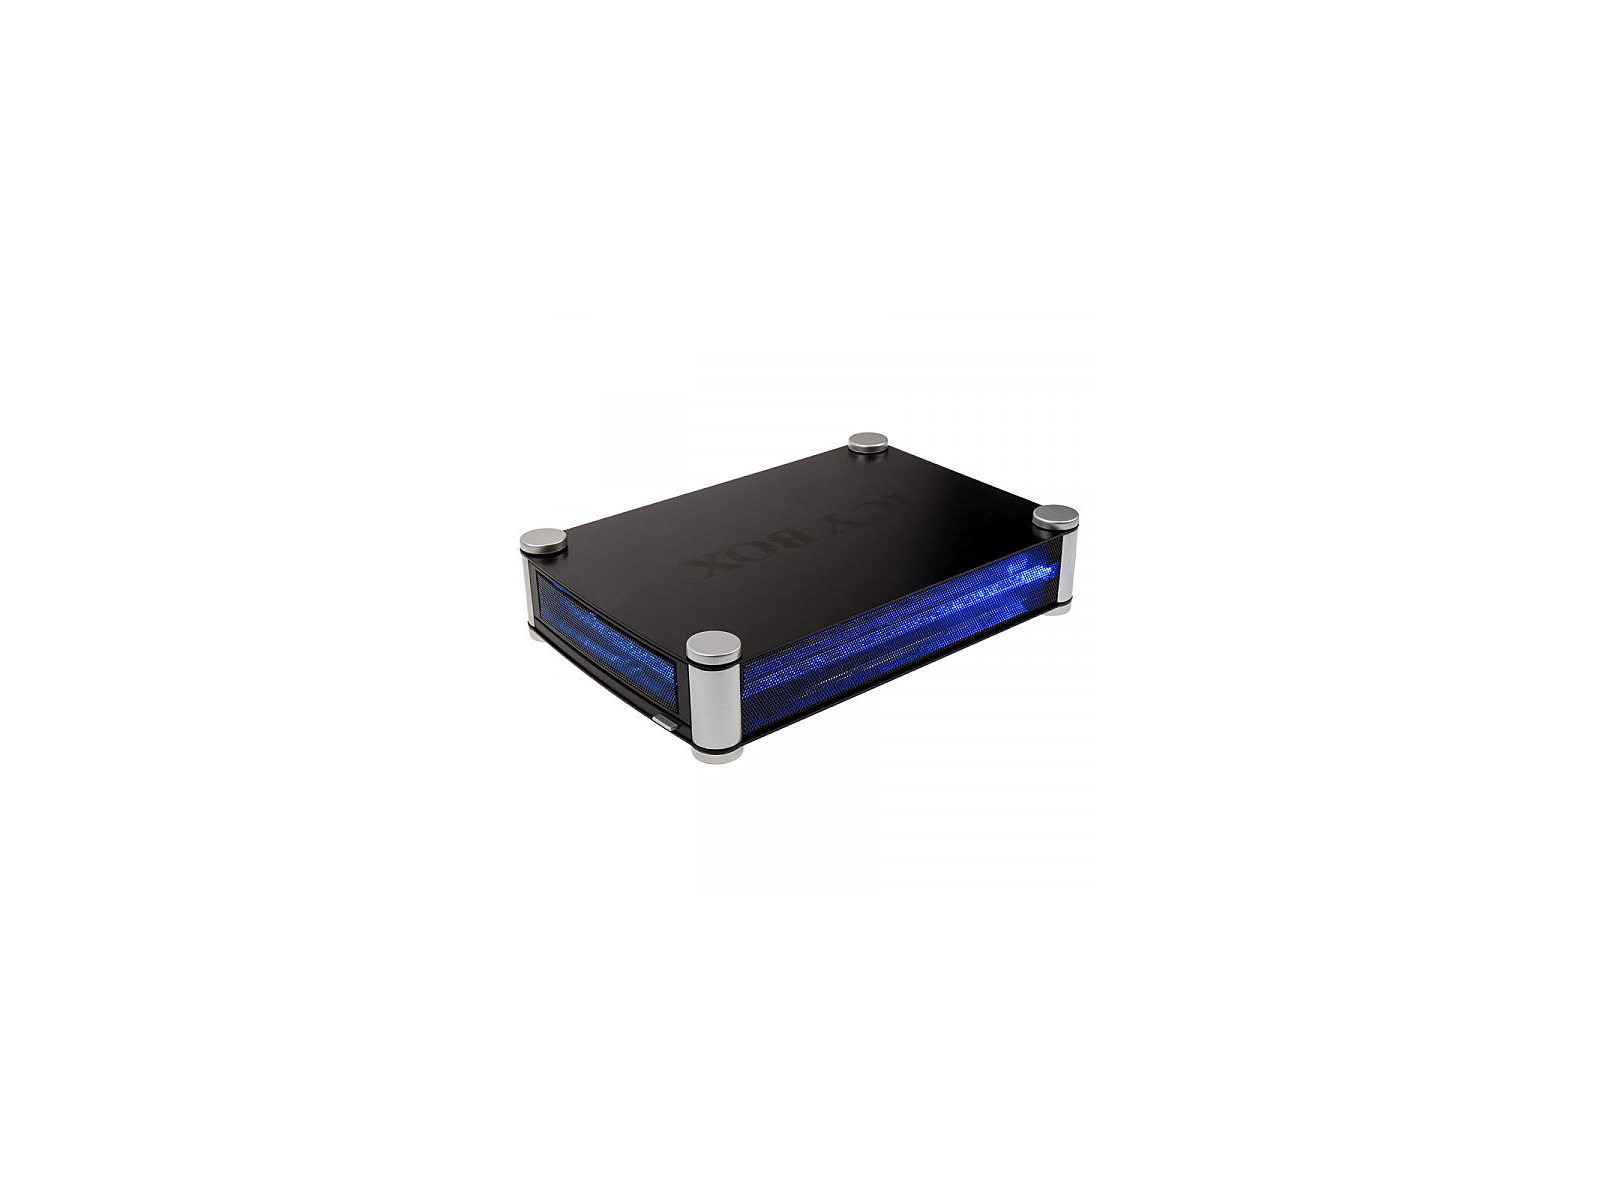 Raidsonic IB-273StU3 - Boîtier externe 2,5 HDD / SSD SATA, USB 3.0 -  SECOMP France